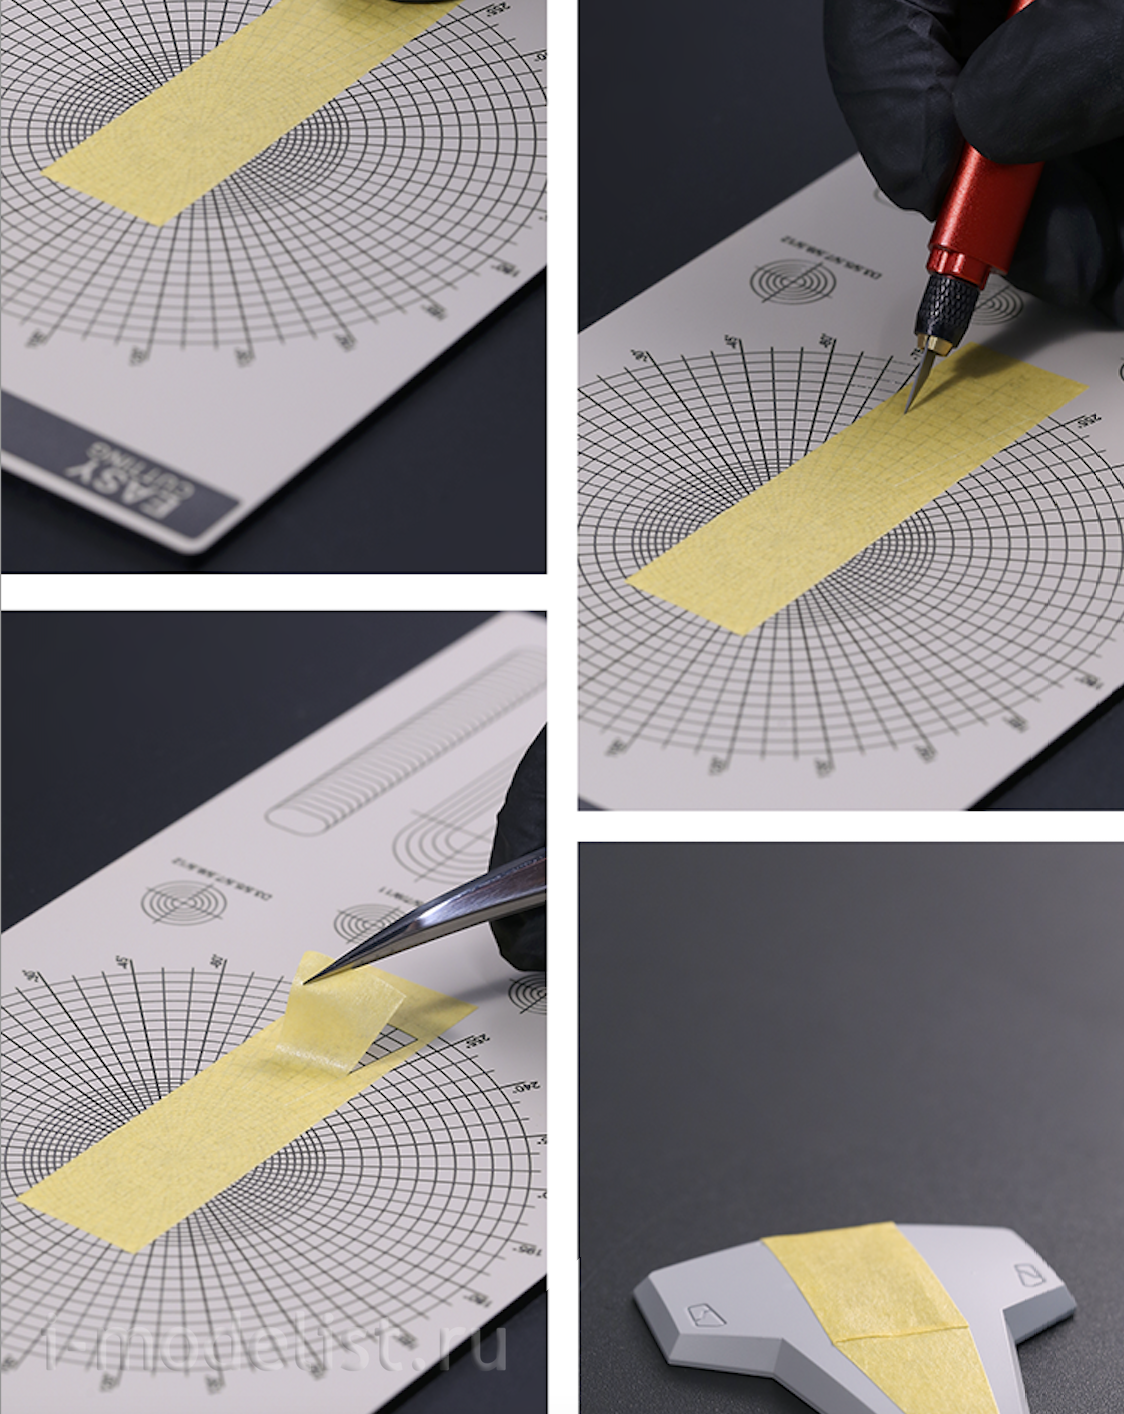 AT-ECC DSPIAE Adhesive tape cutting mat type C, 110x233 mm